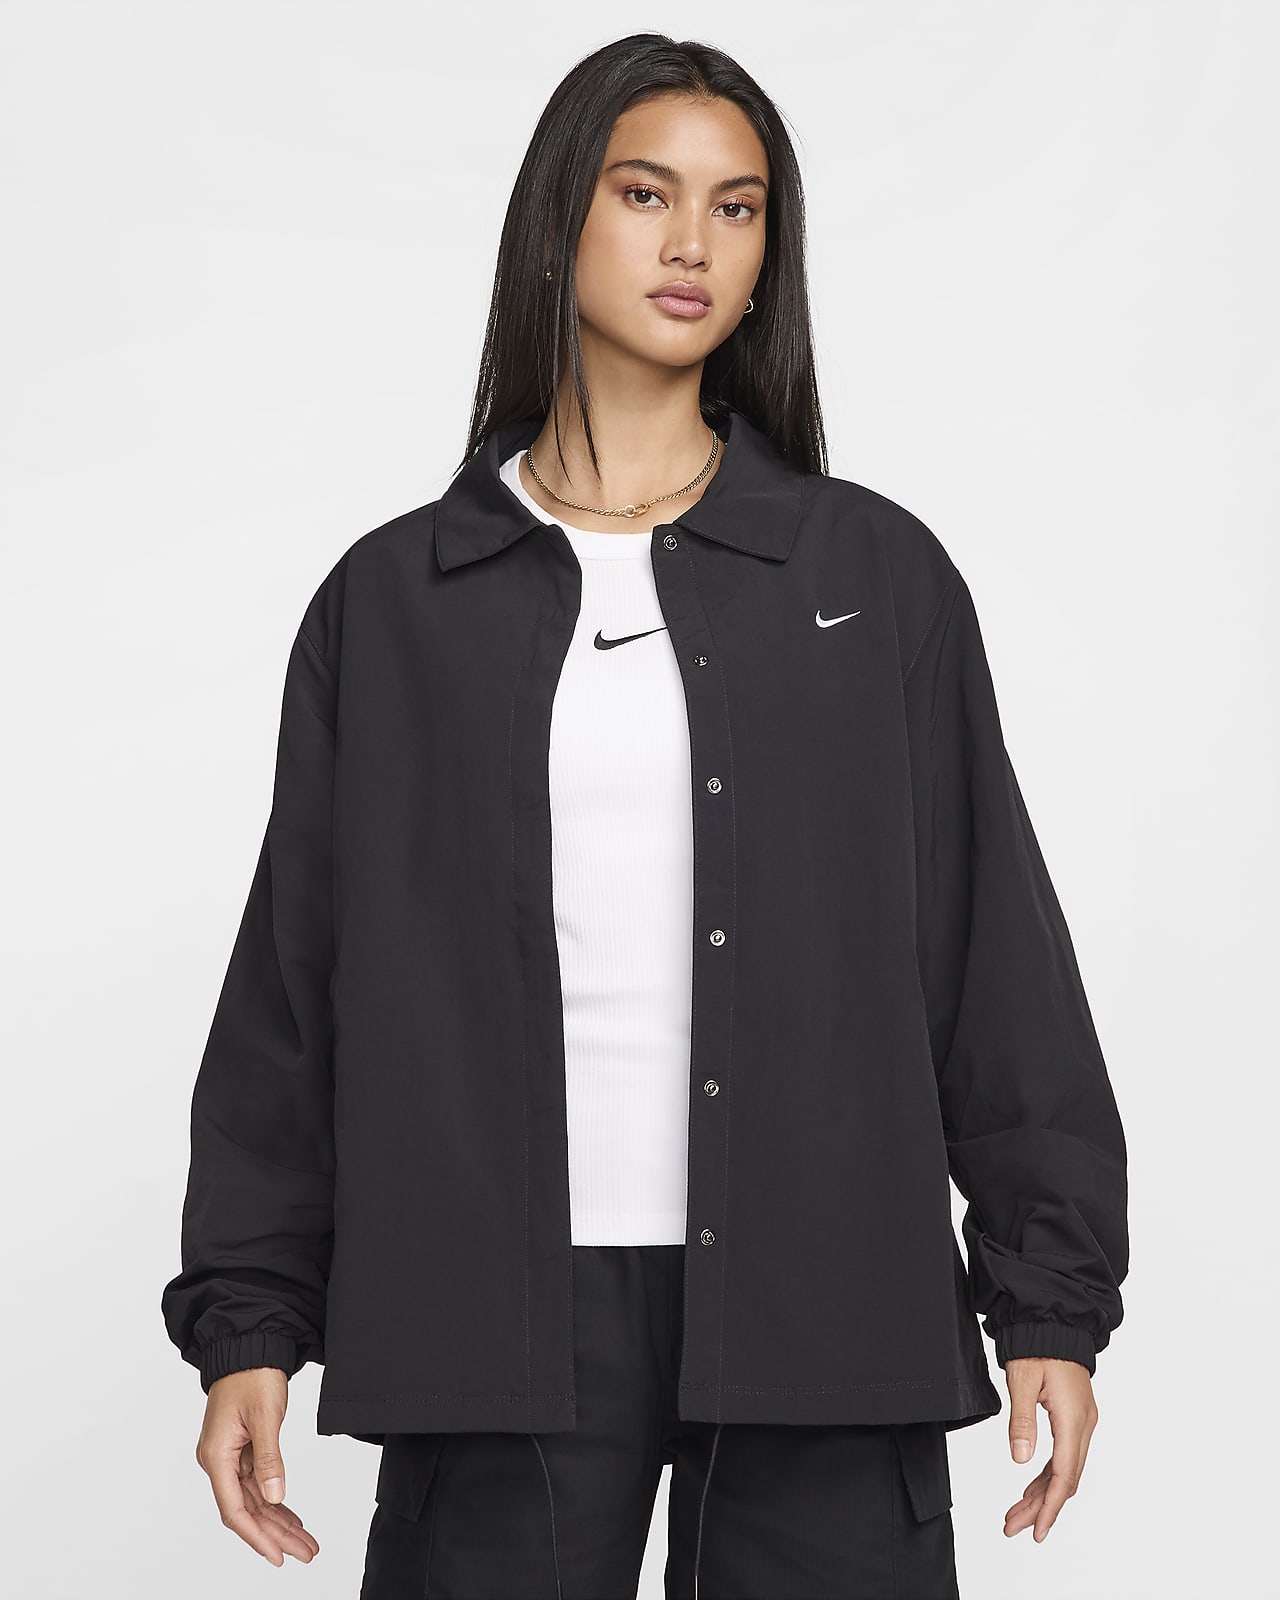 Coach jacket oversize in tessuto UV Nike Sportswear Essential – Donna